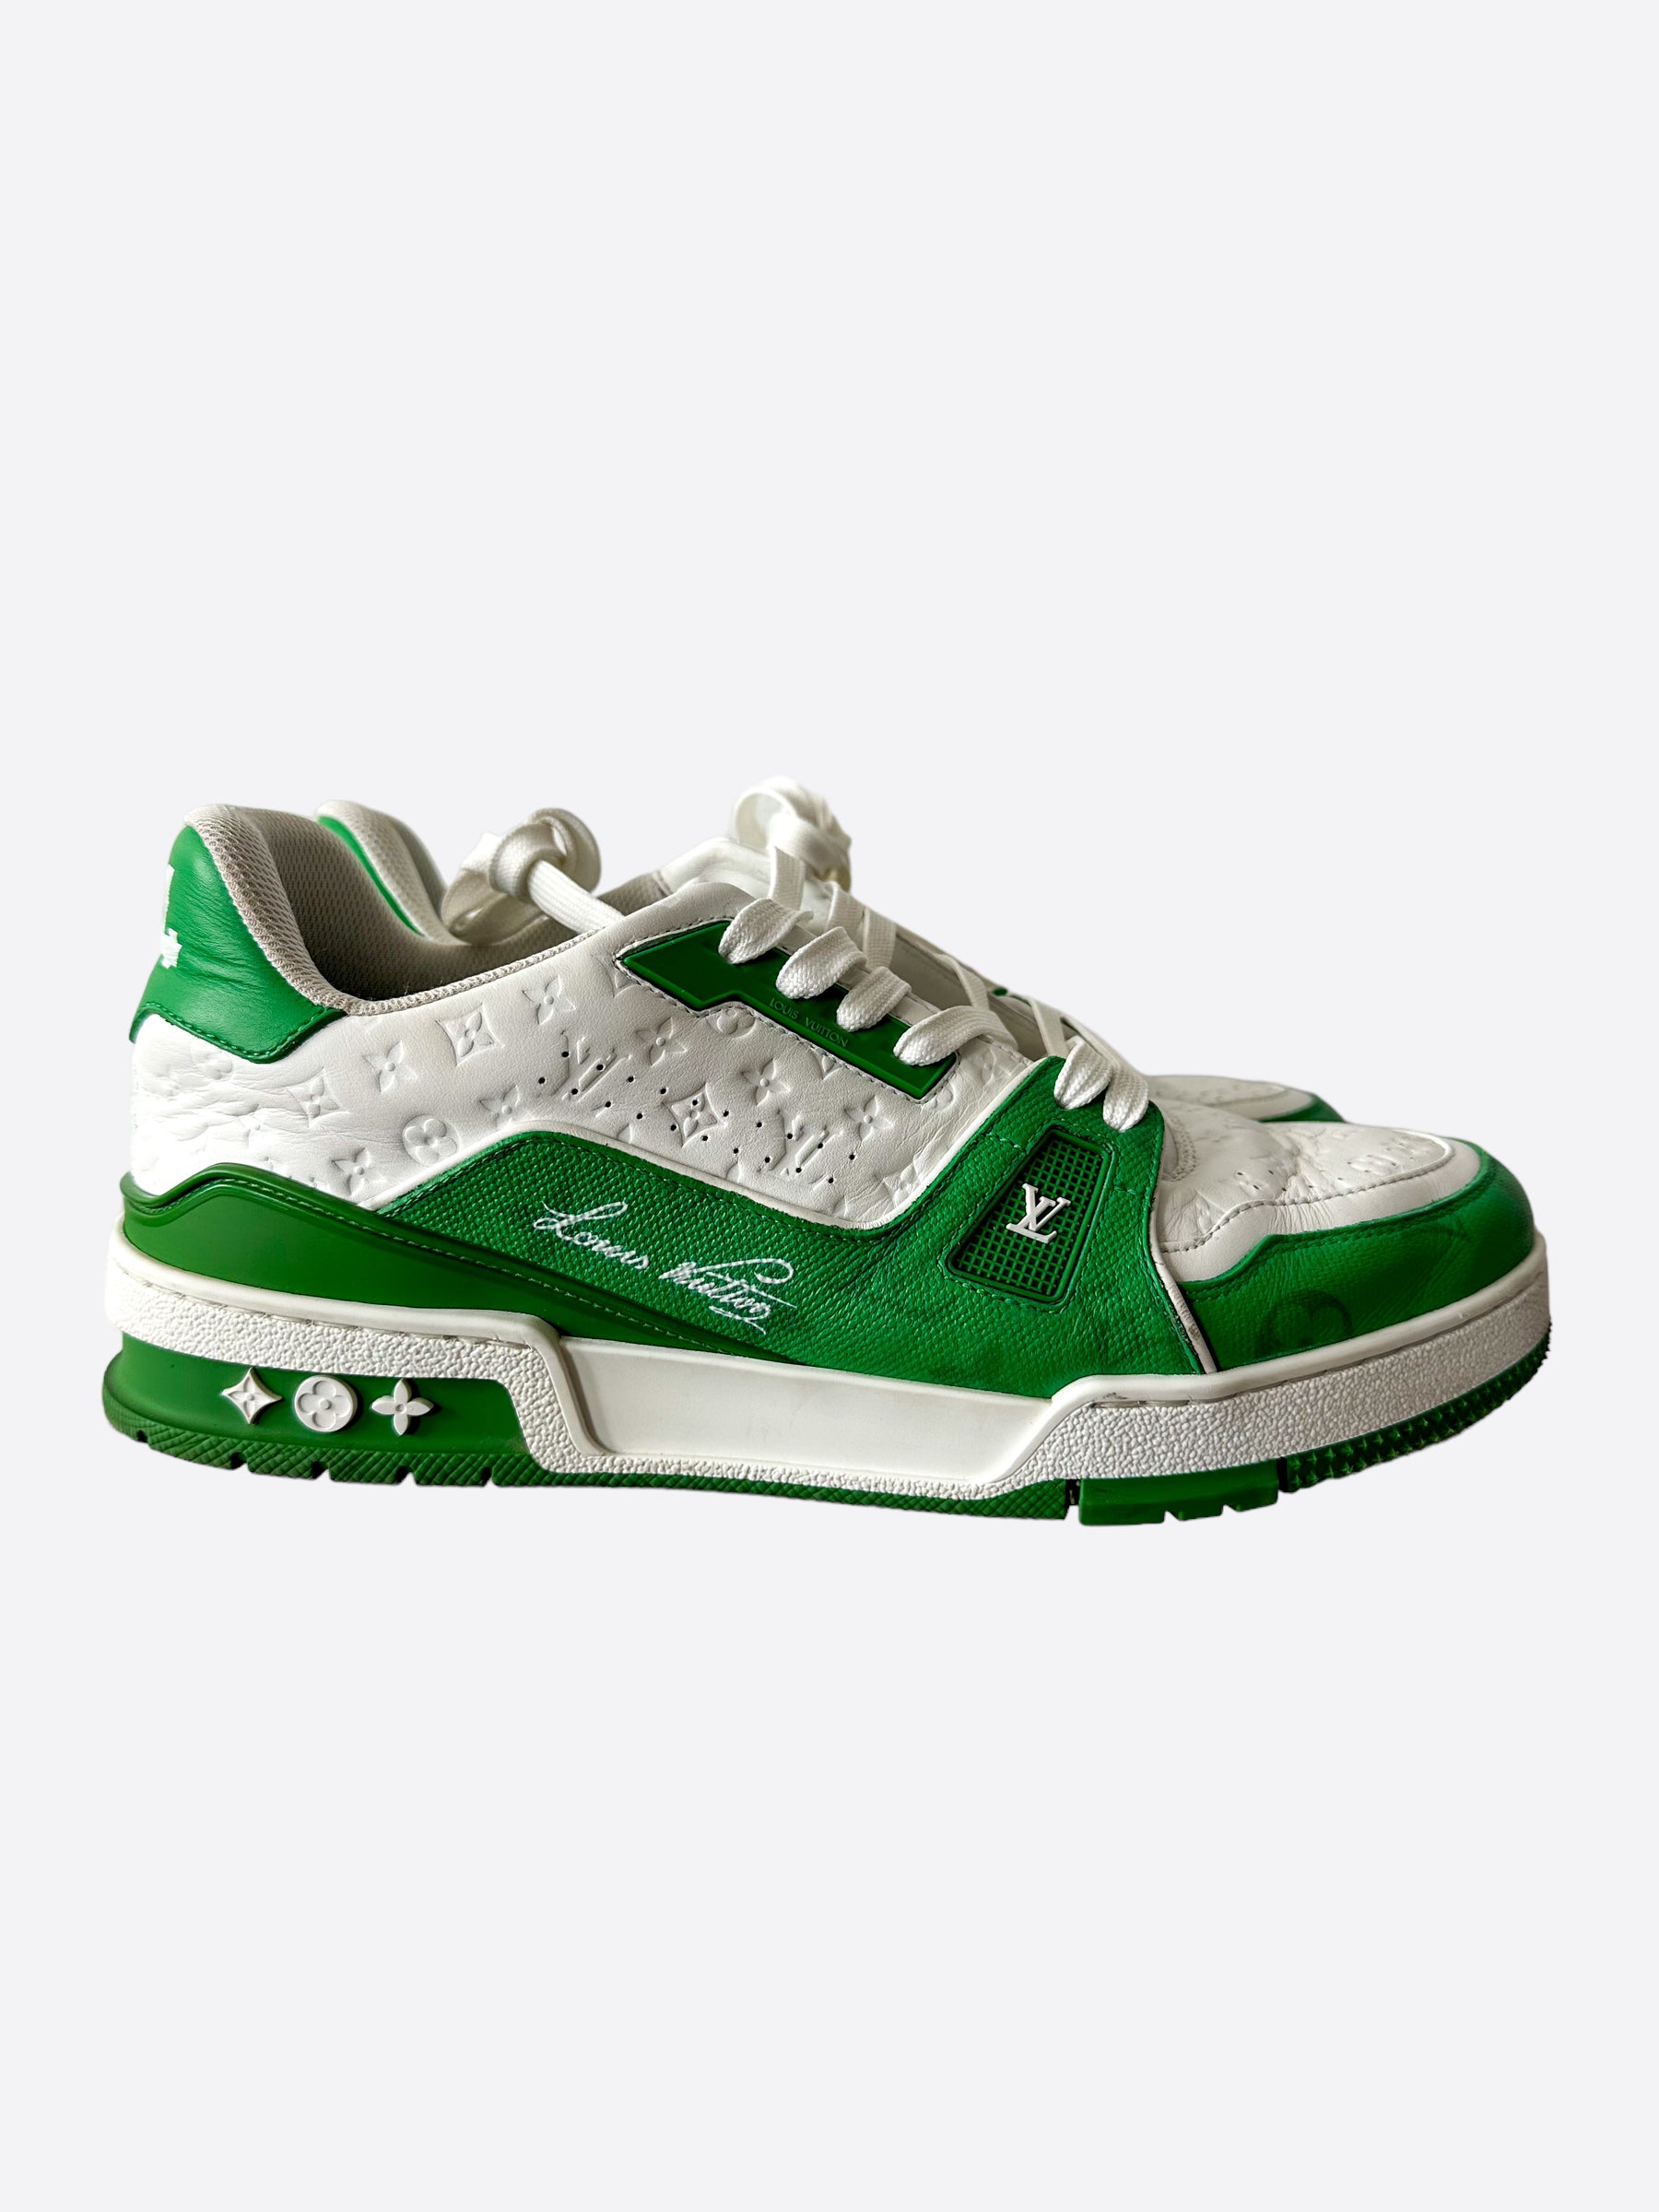 louis vuitton shoes green